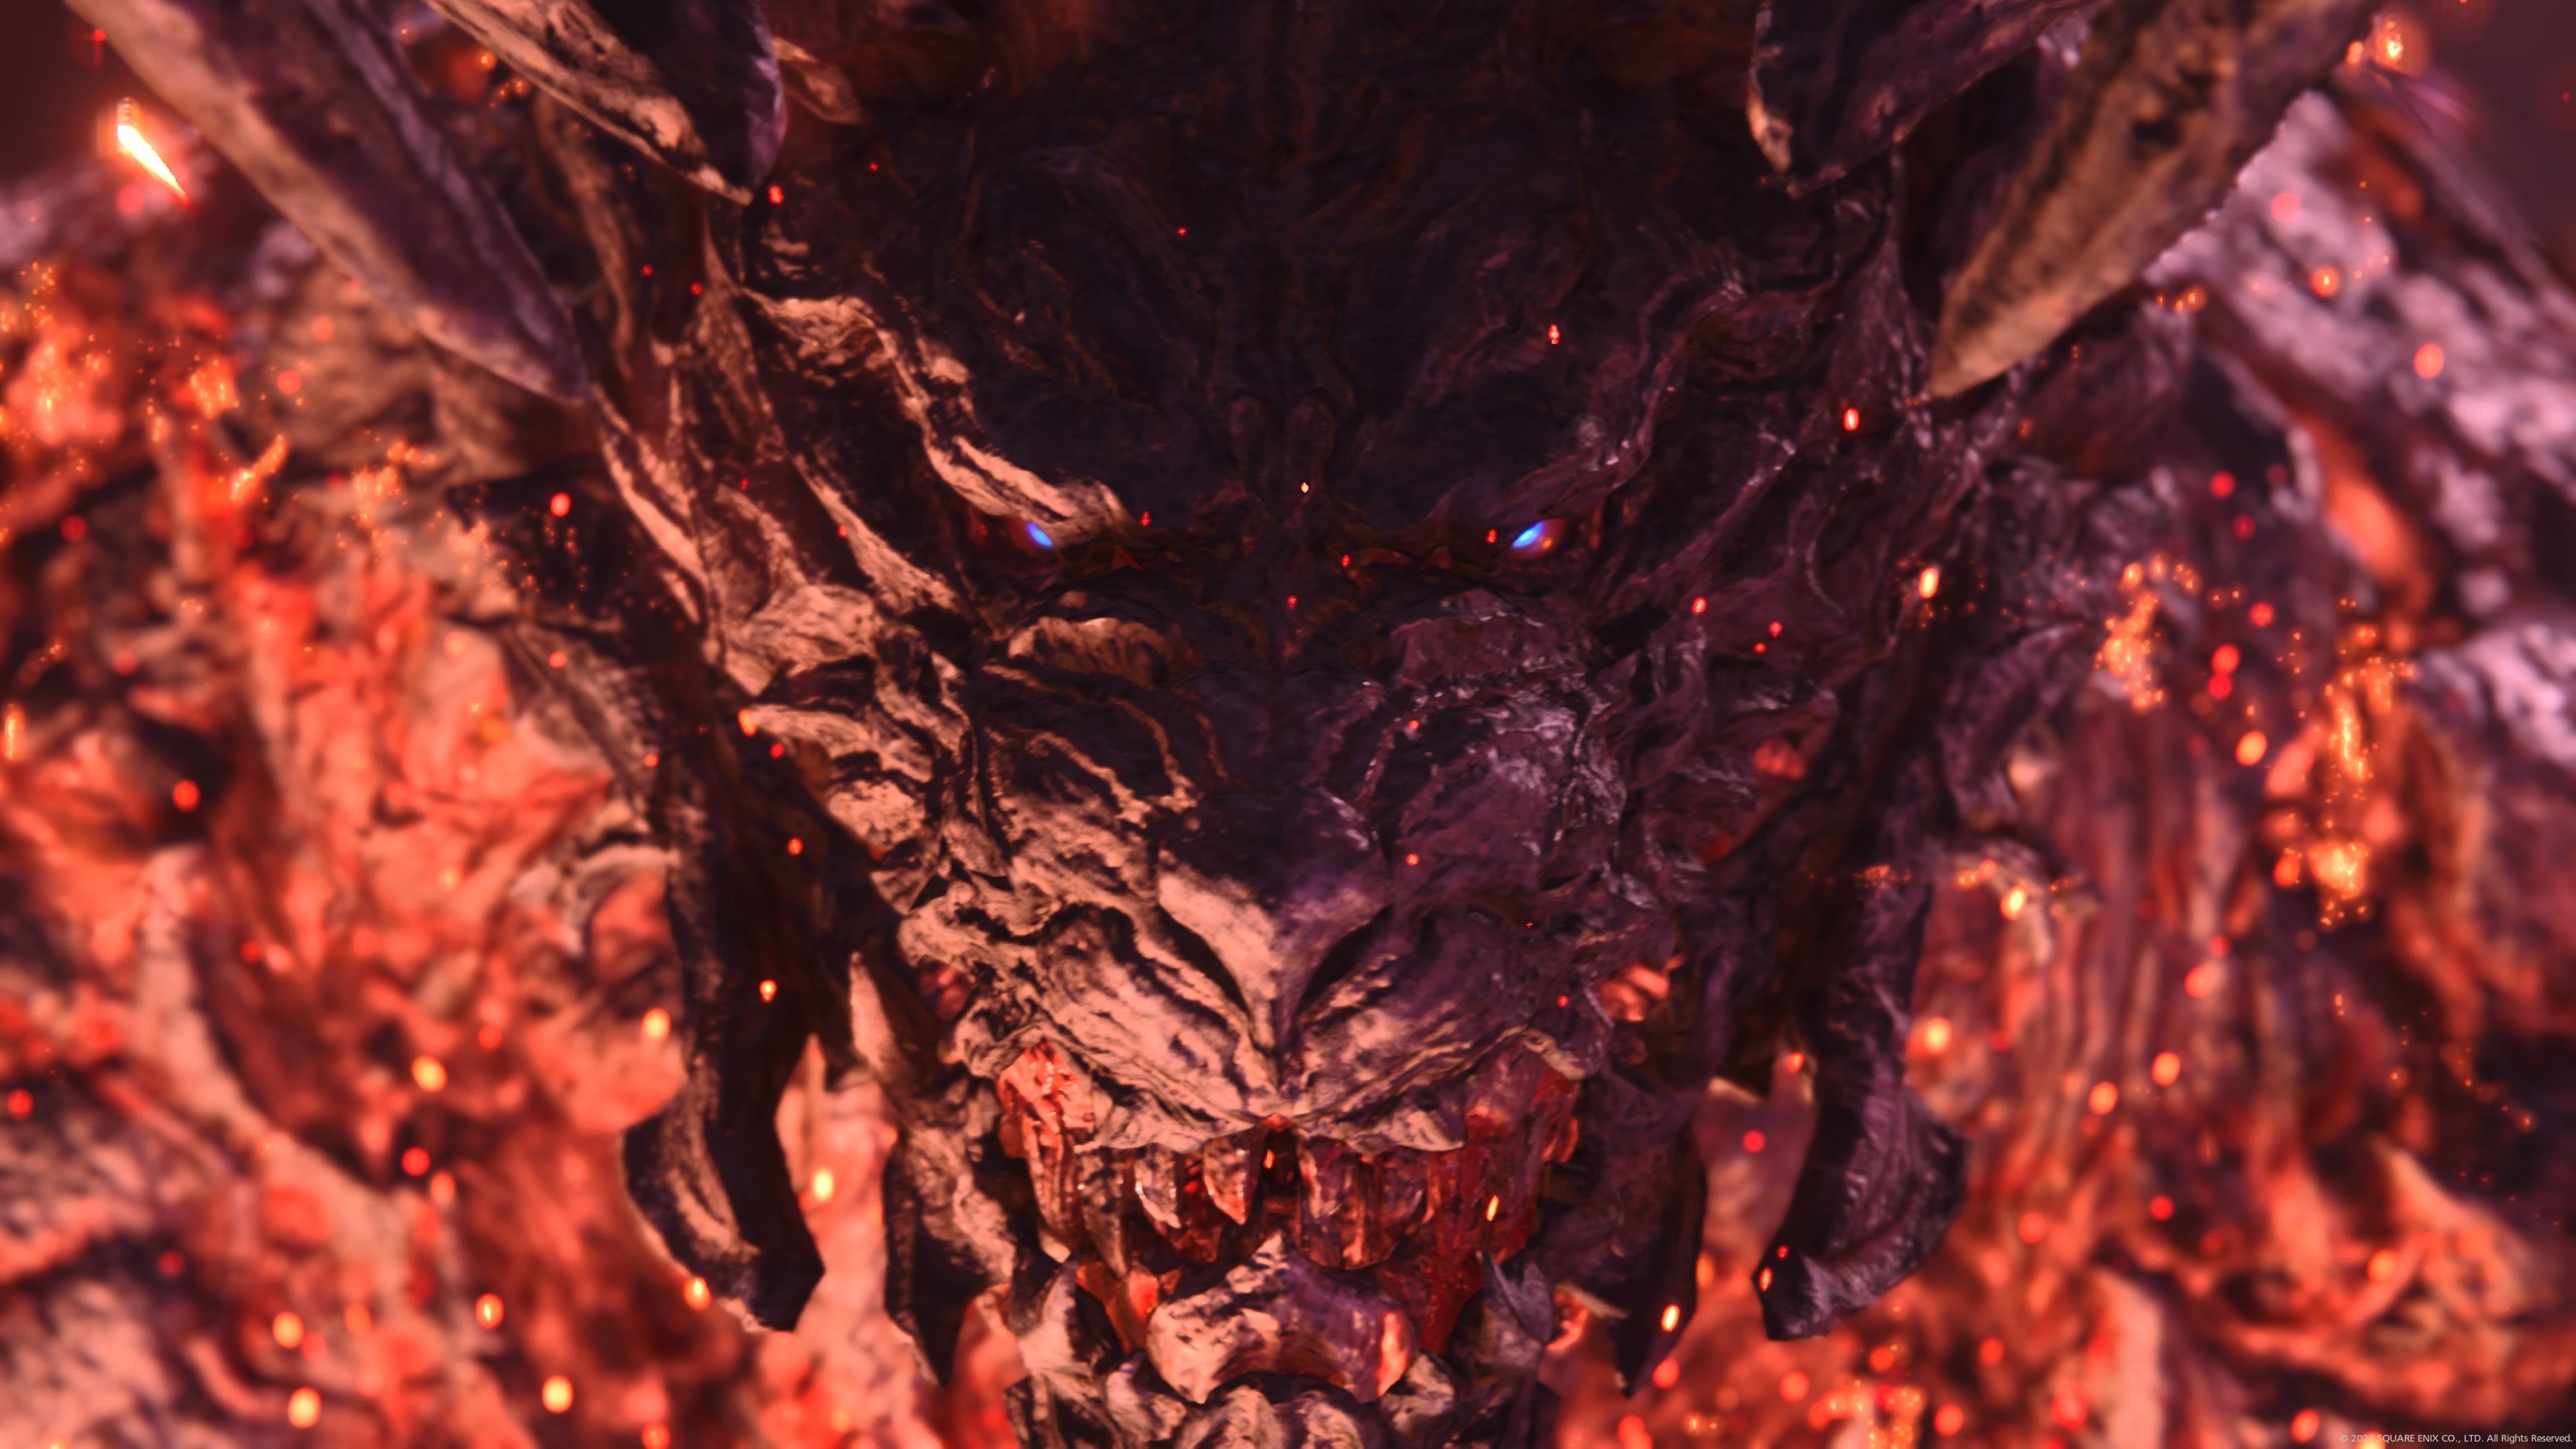 General 3840x2160 Final Fantasy XVI video games Final Fantasy screen shot CGI looking at viewer creature glowing eyes face